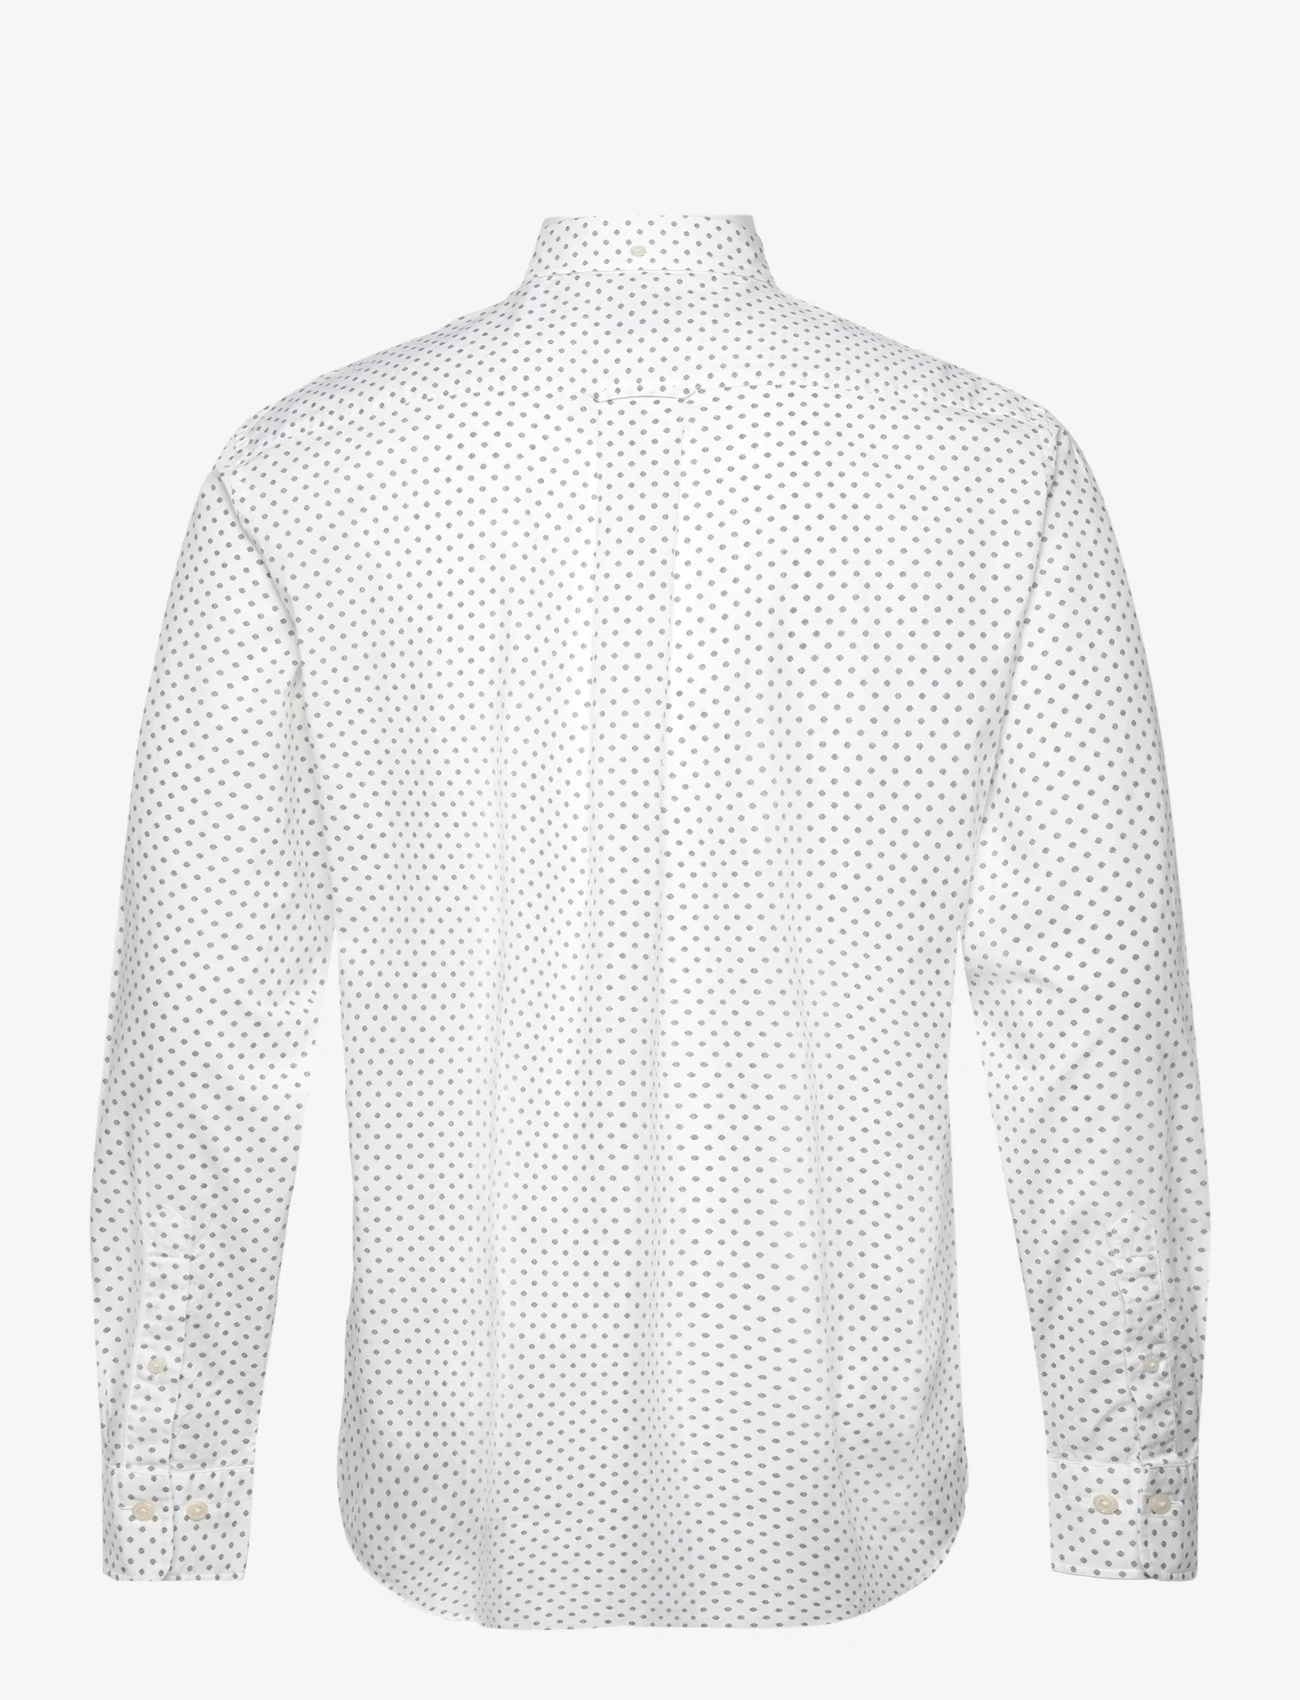 GANT - REG MICRO PRINT SHIRT - casual shirts - eggshell - 1